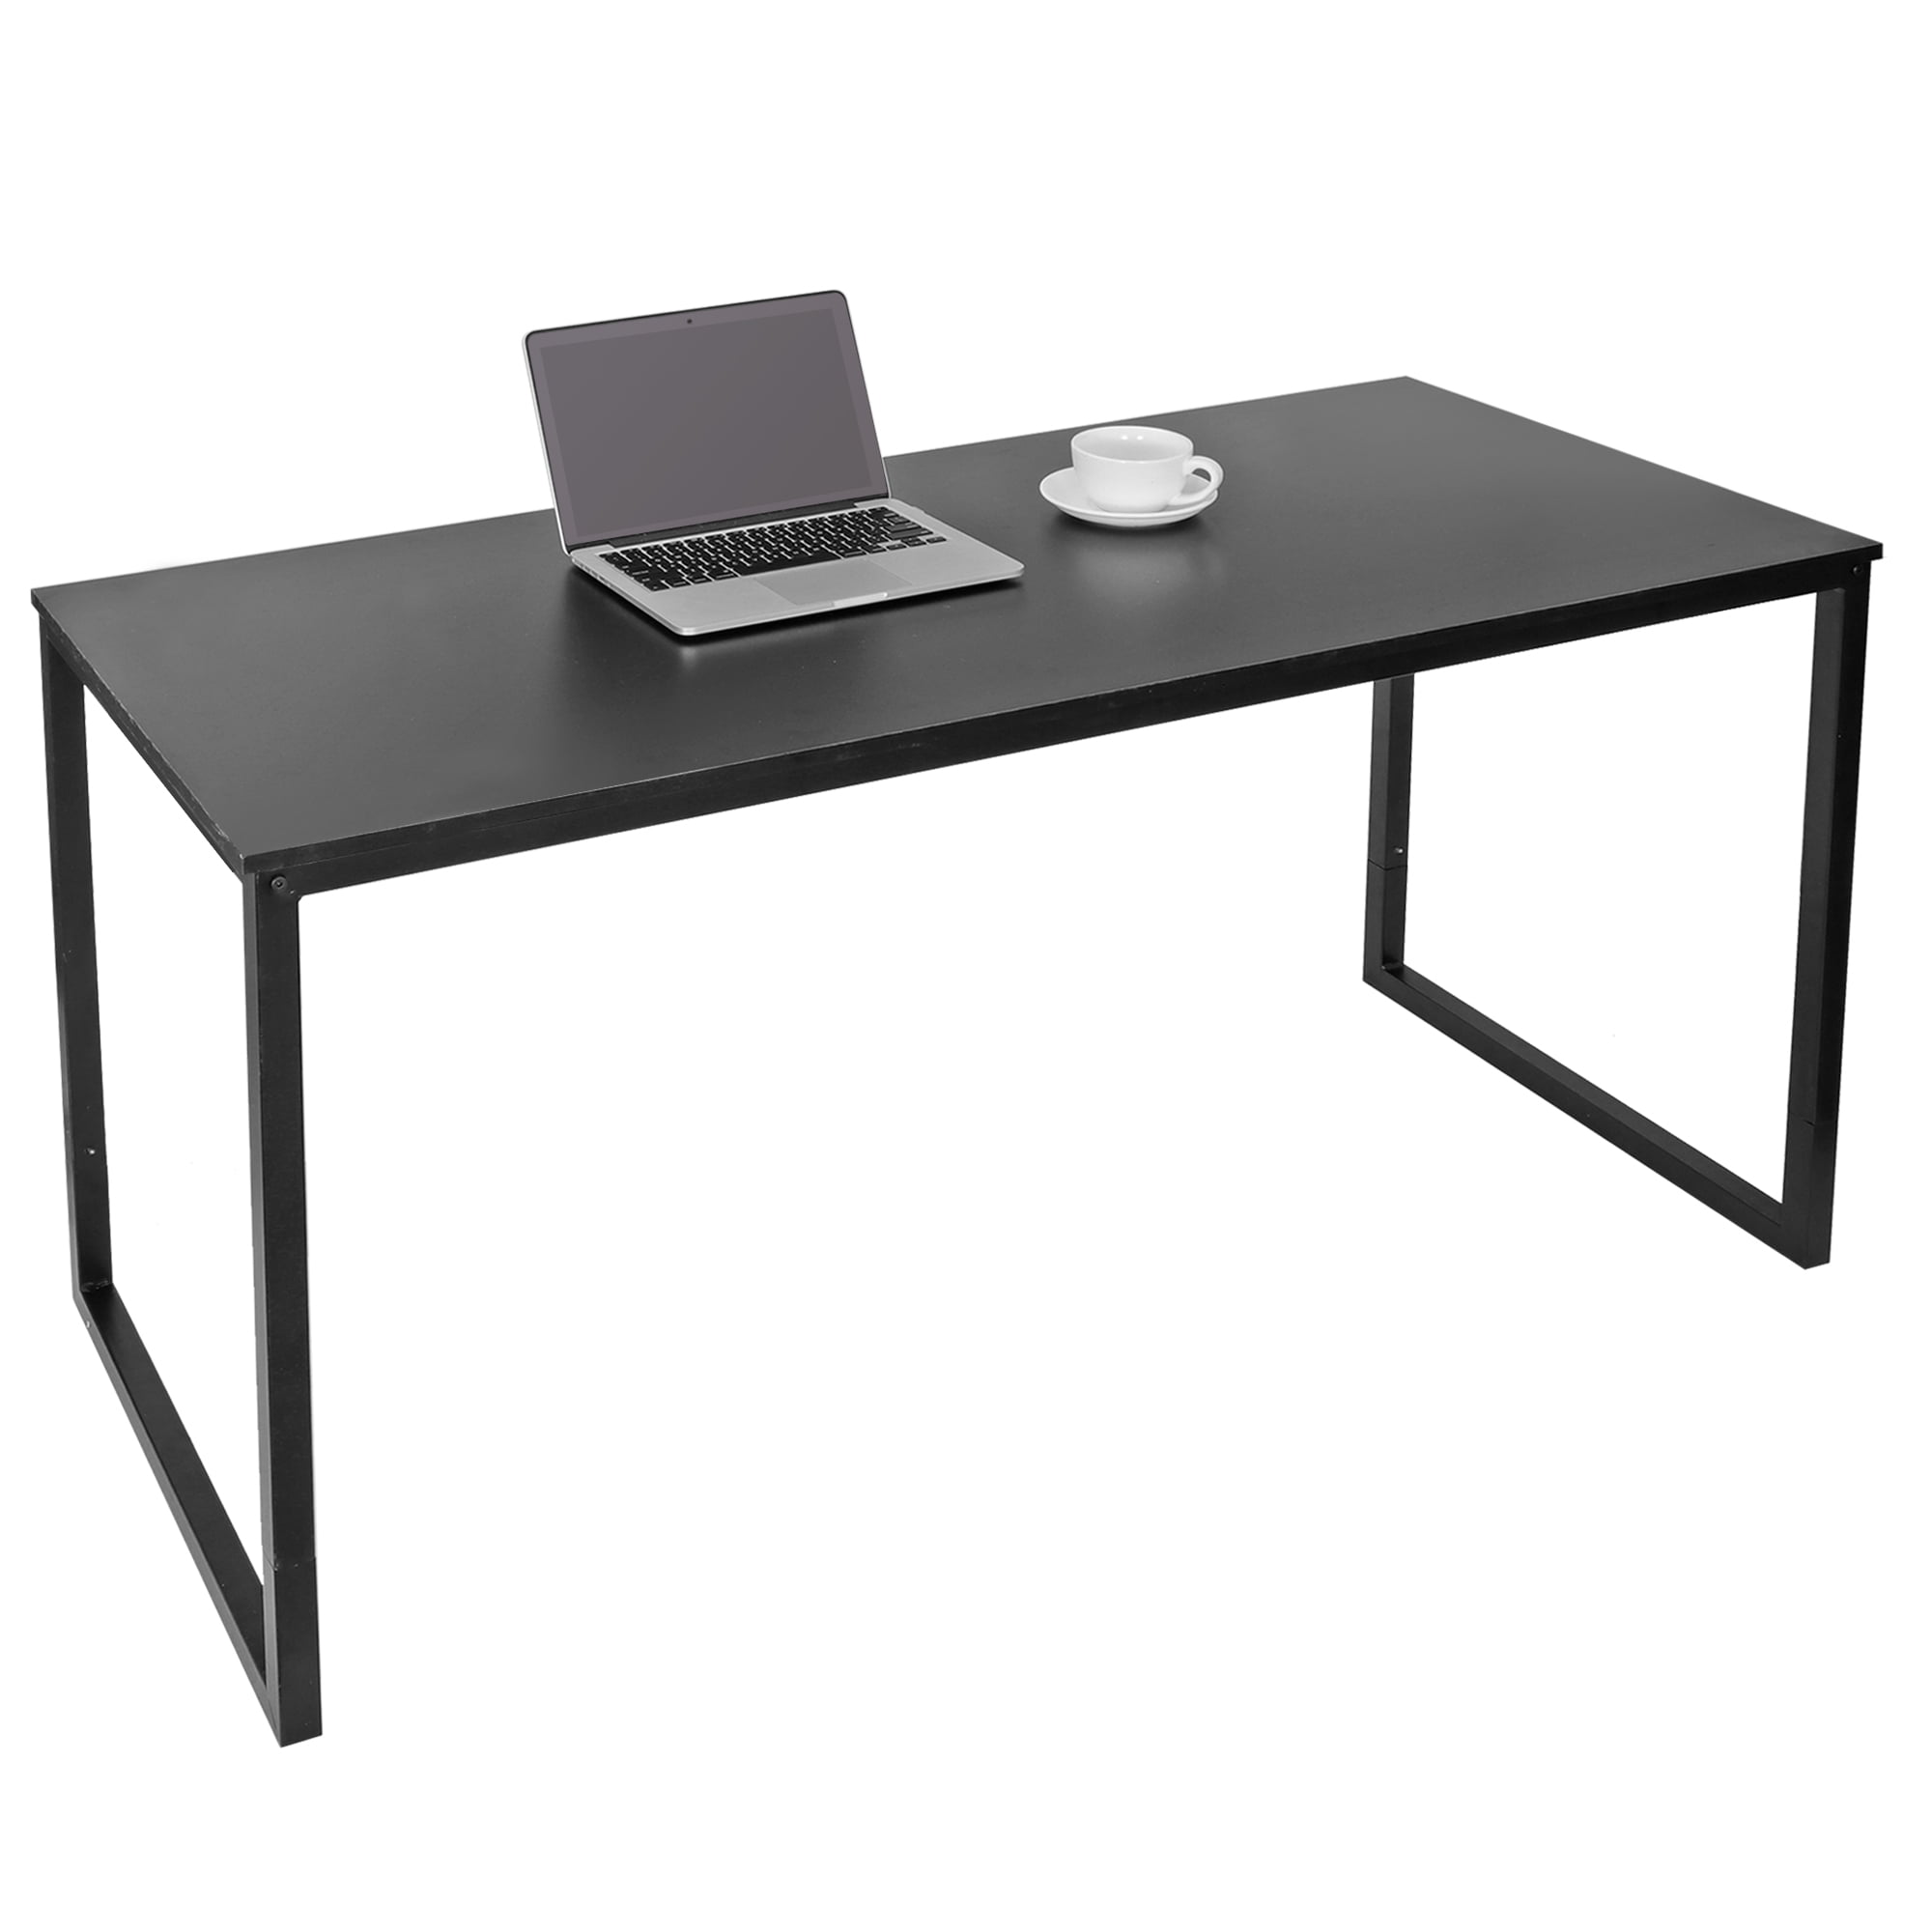 Zenstyle Modern Simple Style Laptop Personal Computer Desk Workstation Studio Home Office Rectangular - 47 inch Length, Black